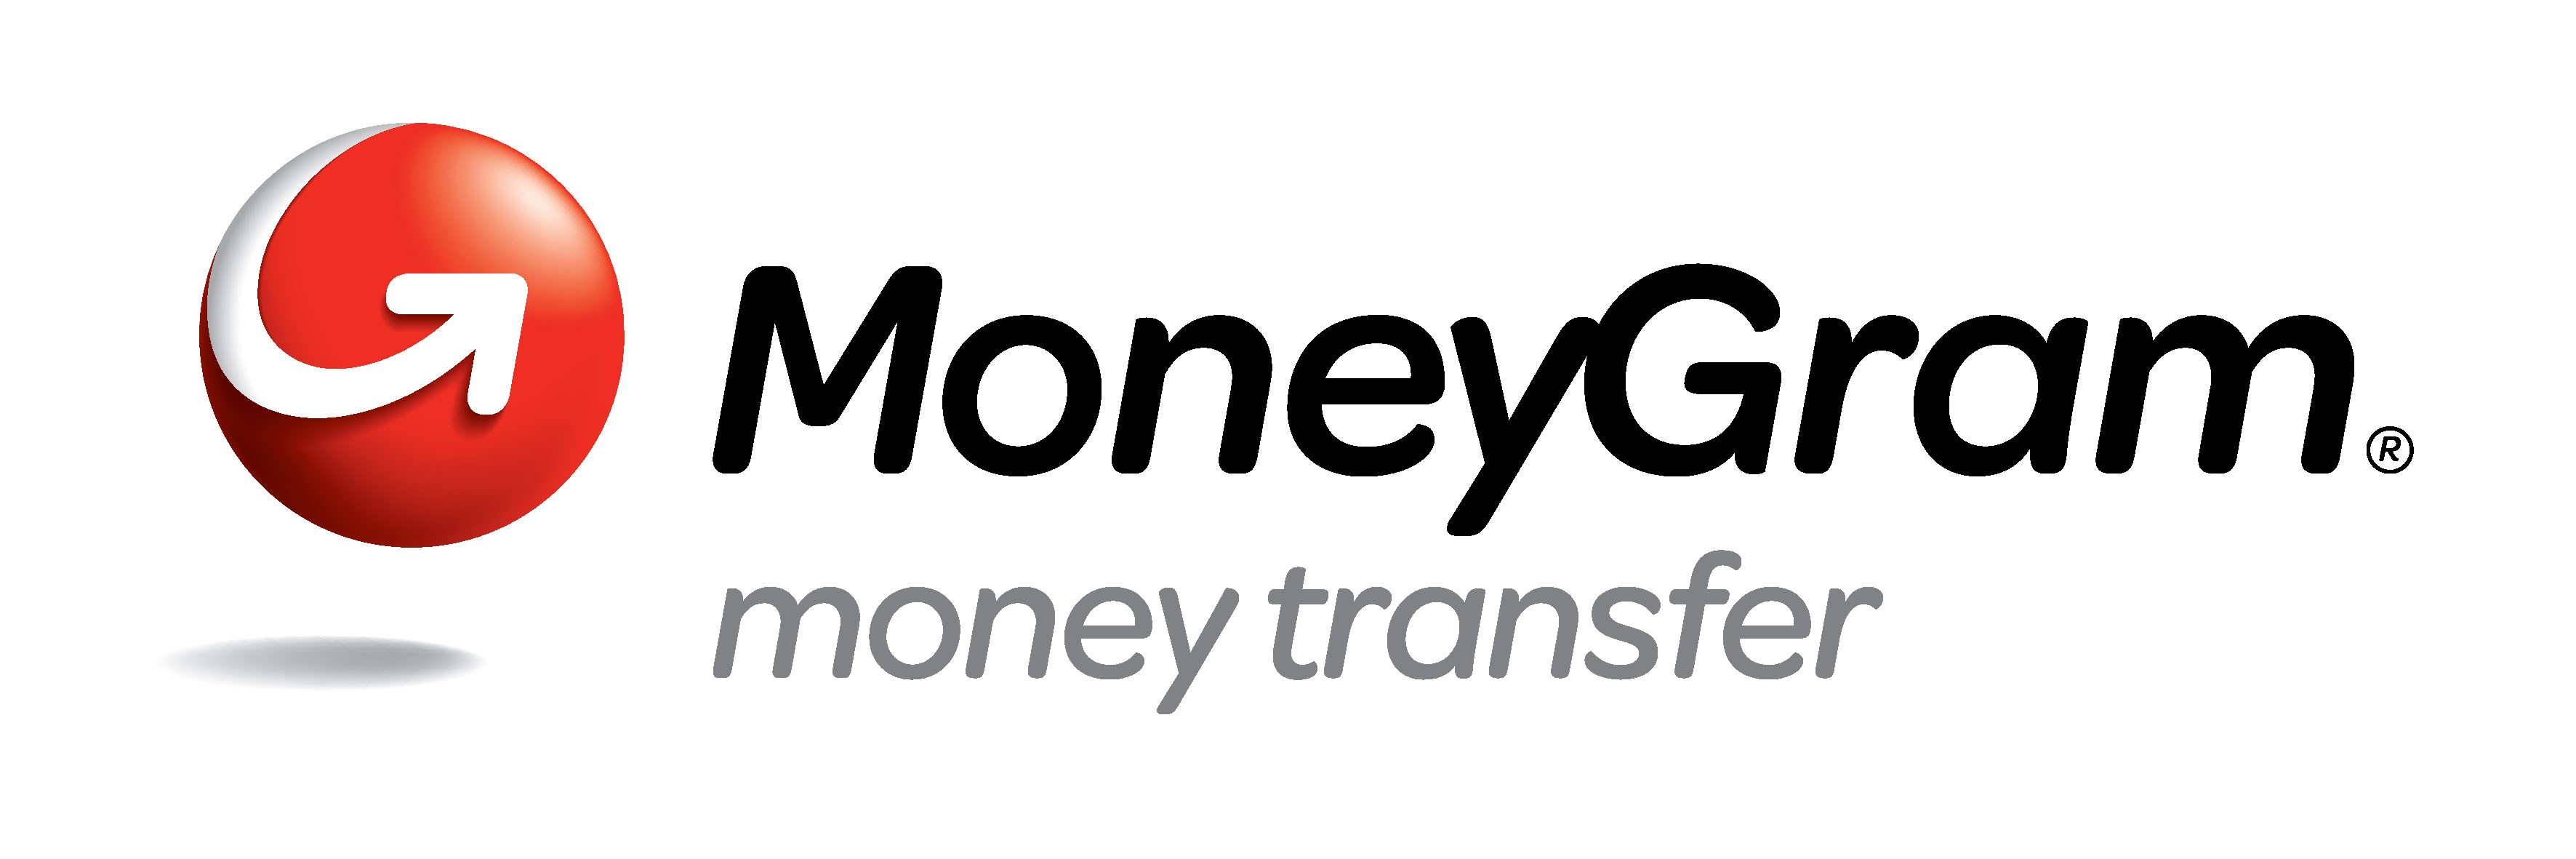 MoneyGram Money Transfer Service in Kenya, Send and Receive.